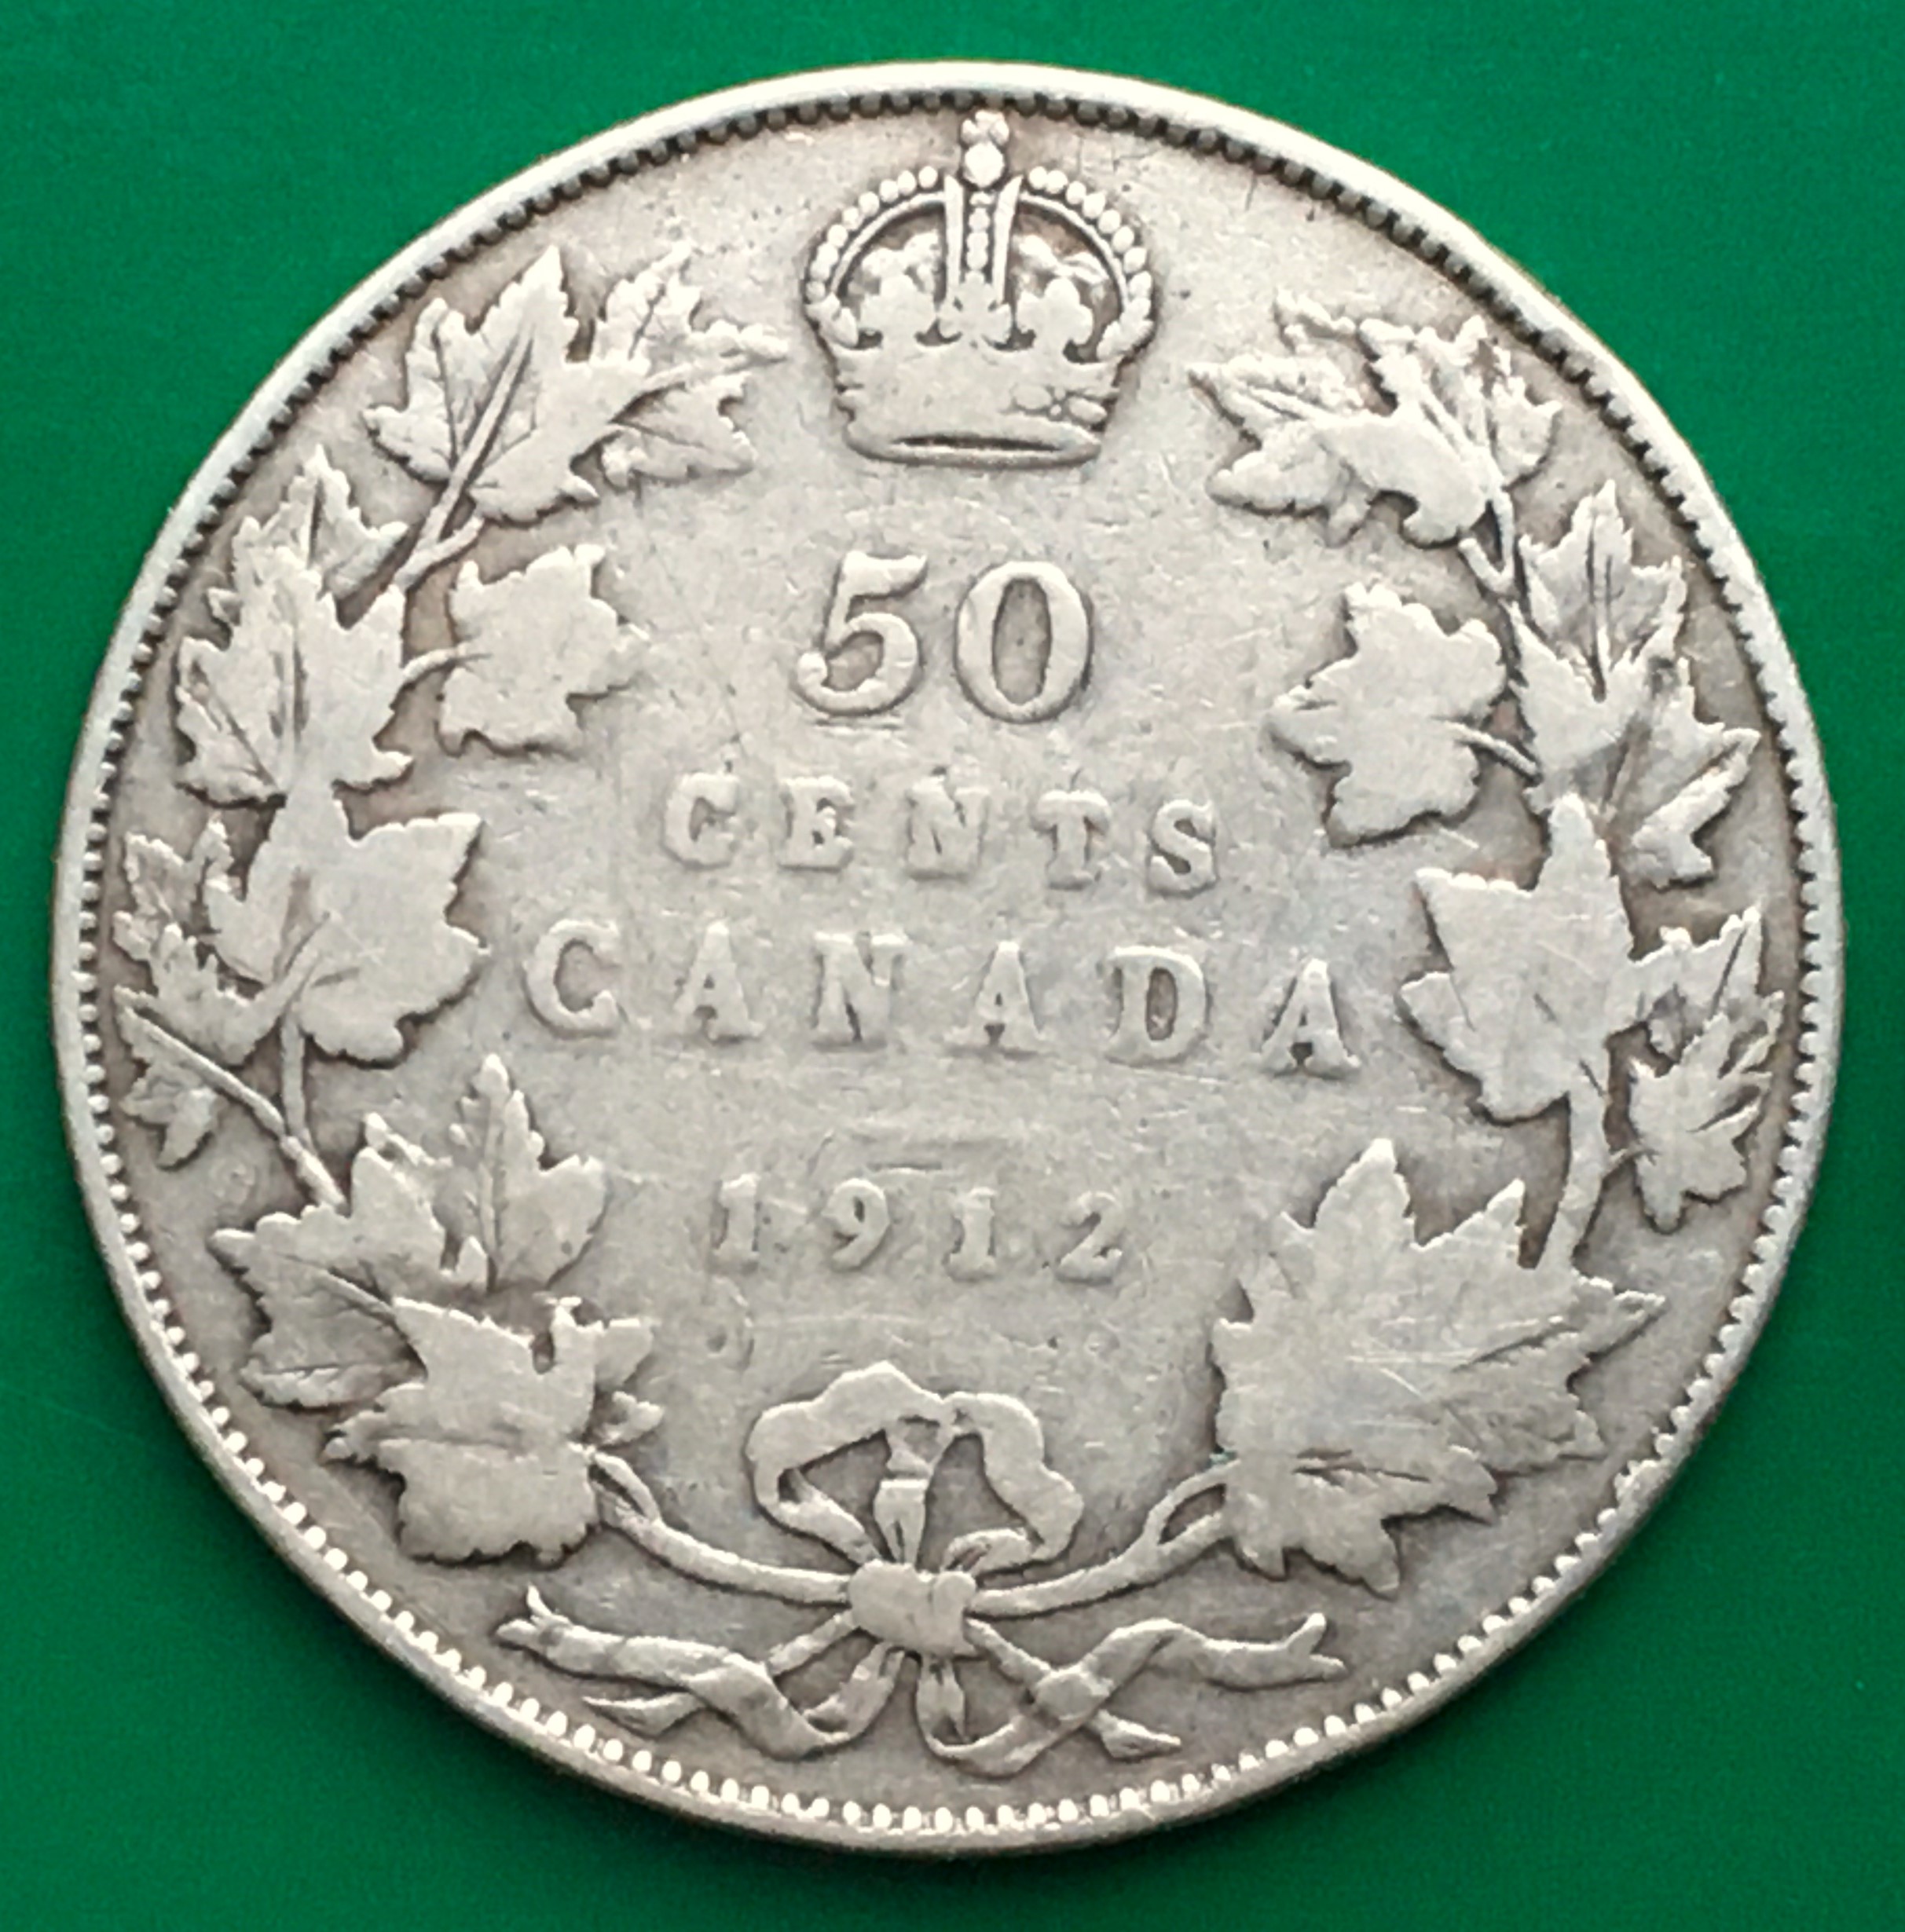 50 cents 1912.JPG